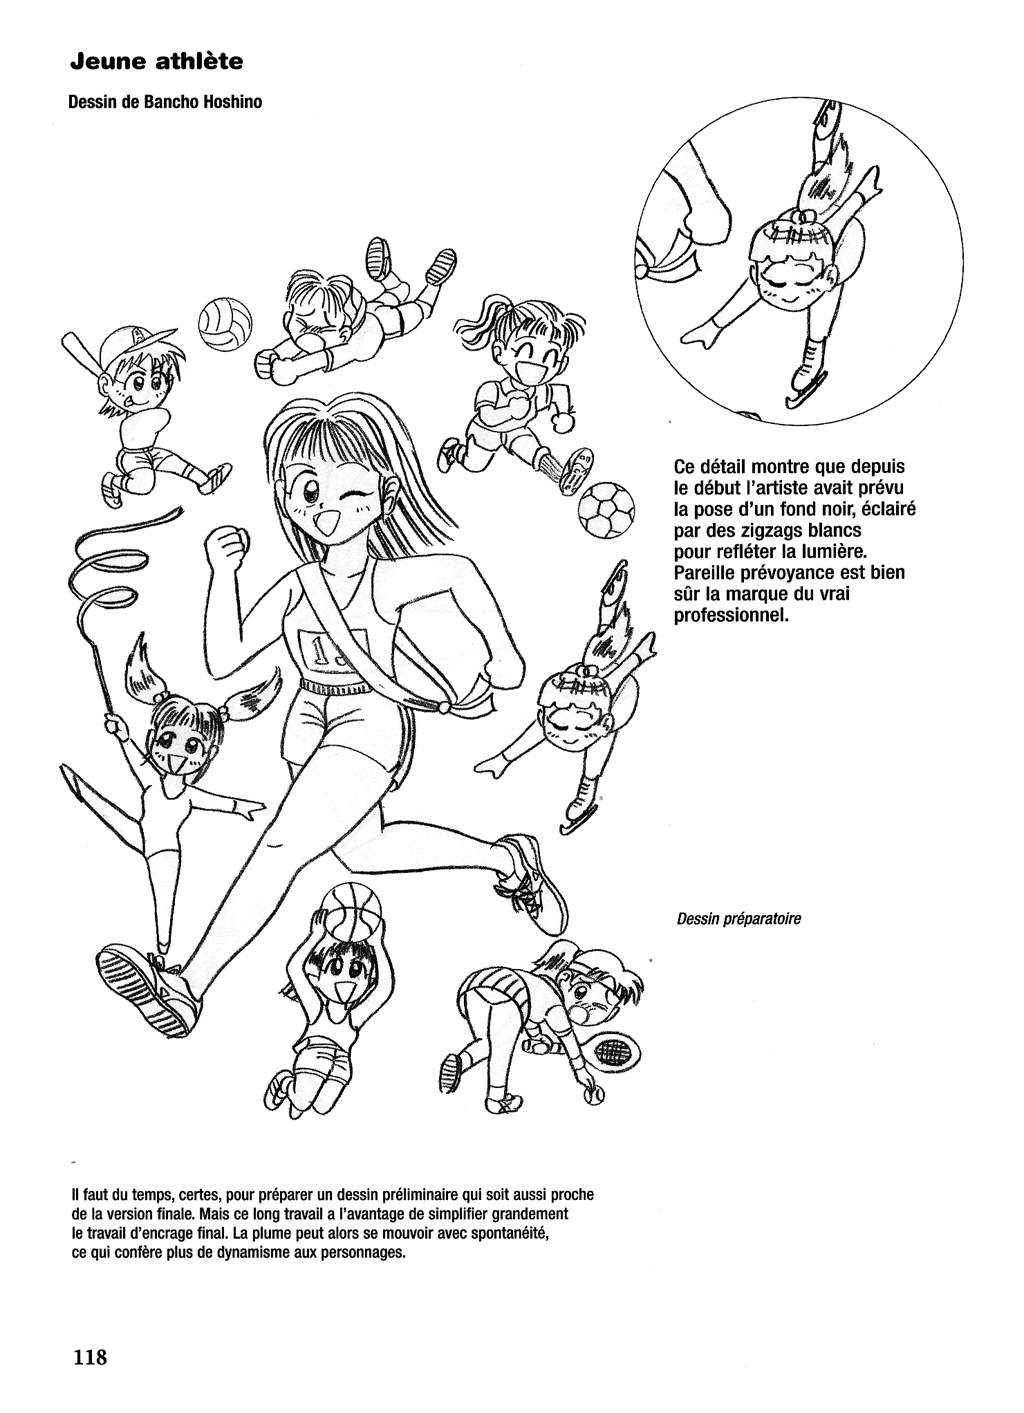 Le dessin du Manga 04 - Personnages feminin, Attitudes, Expressions numero d'image 118